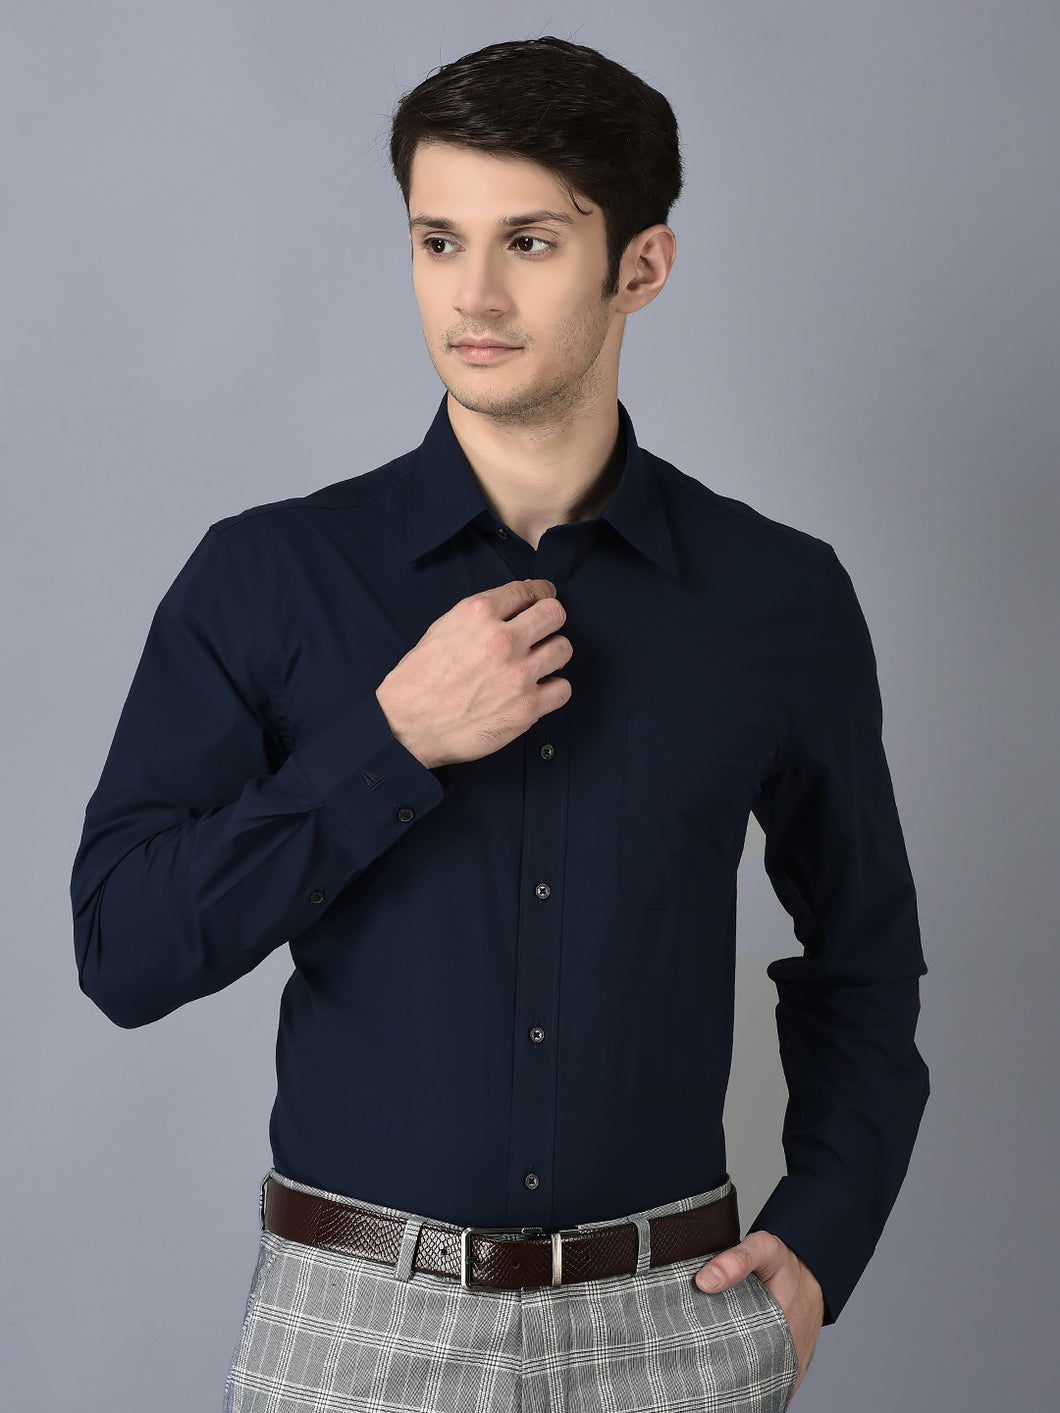 CANOE MEN Formal Shirt Blue Color Cotton Fabric Button Closure Solid